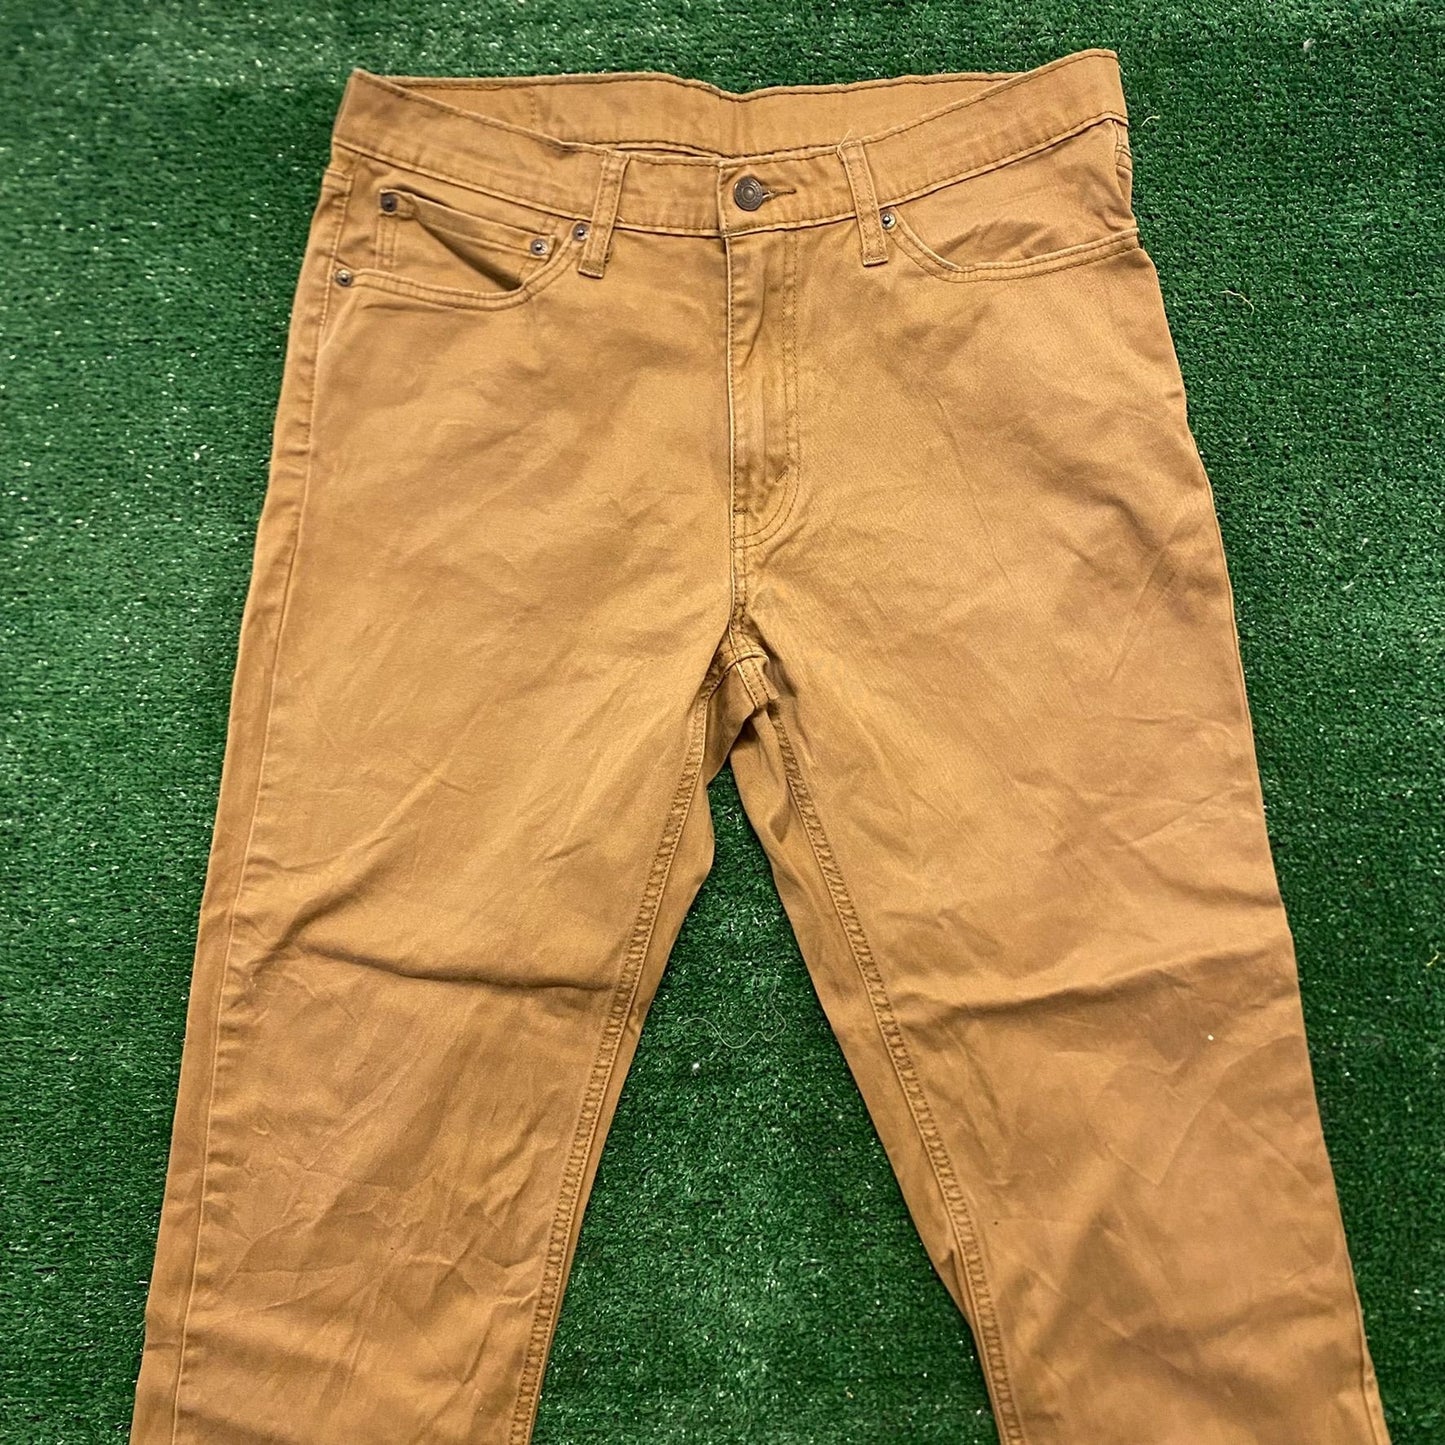 Levi's 541 Athletic Taper Fit Khakis Vintage Work Pants